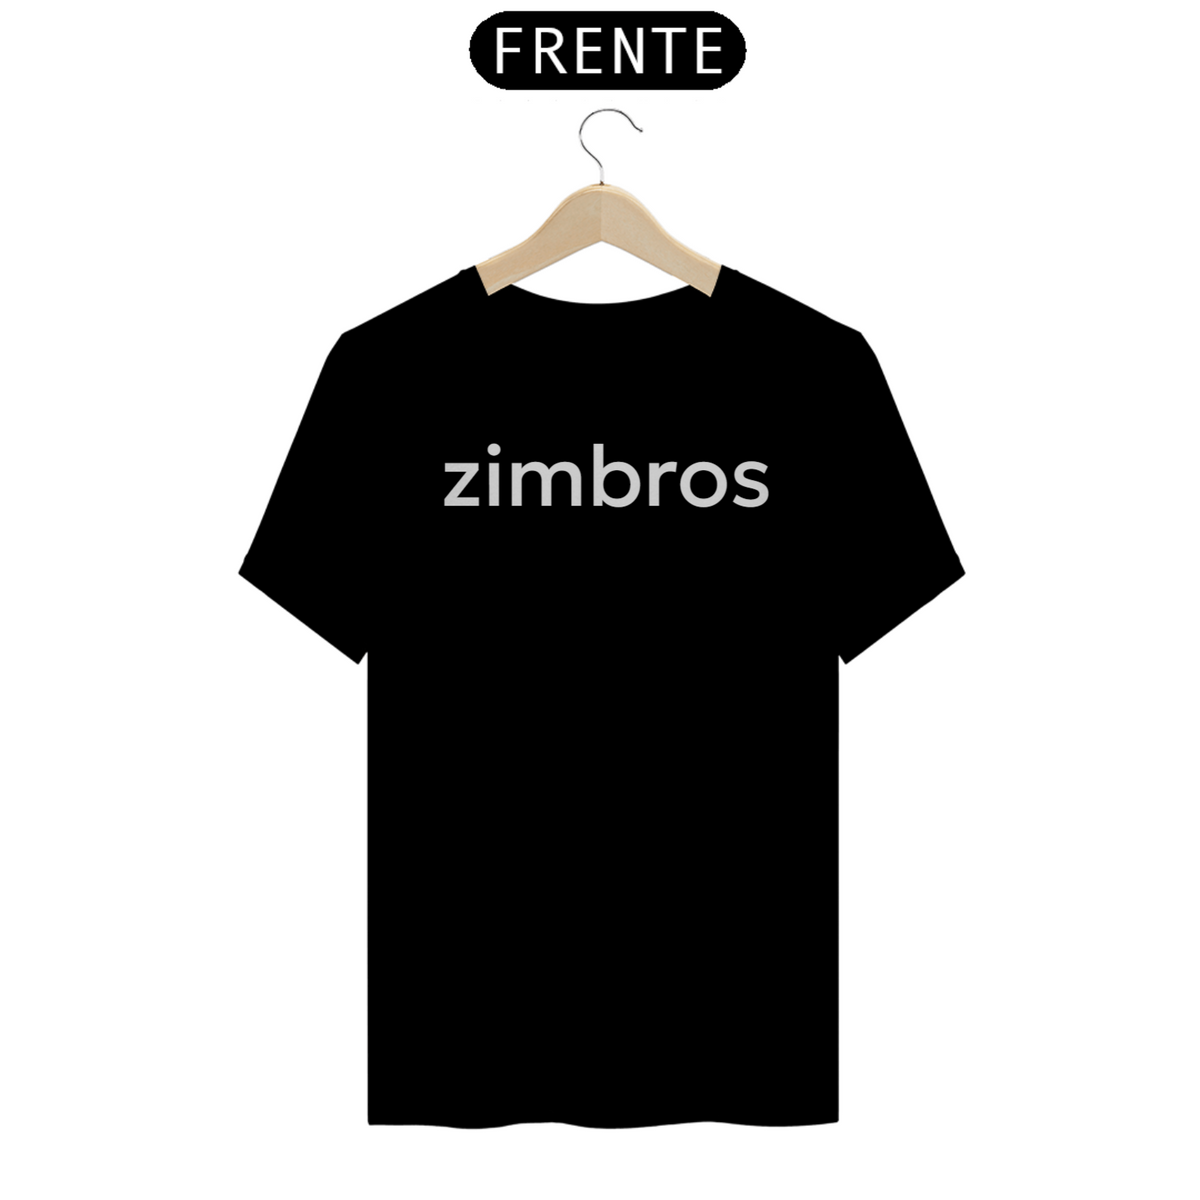 Nome do produto: Camiseta Zimbros